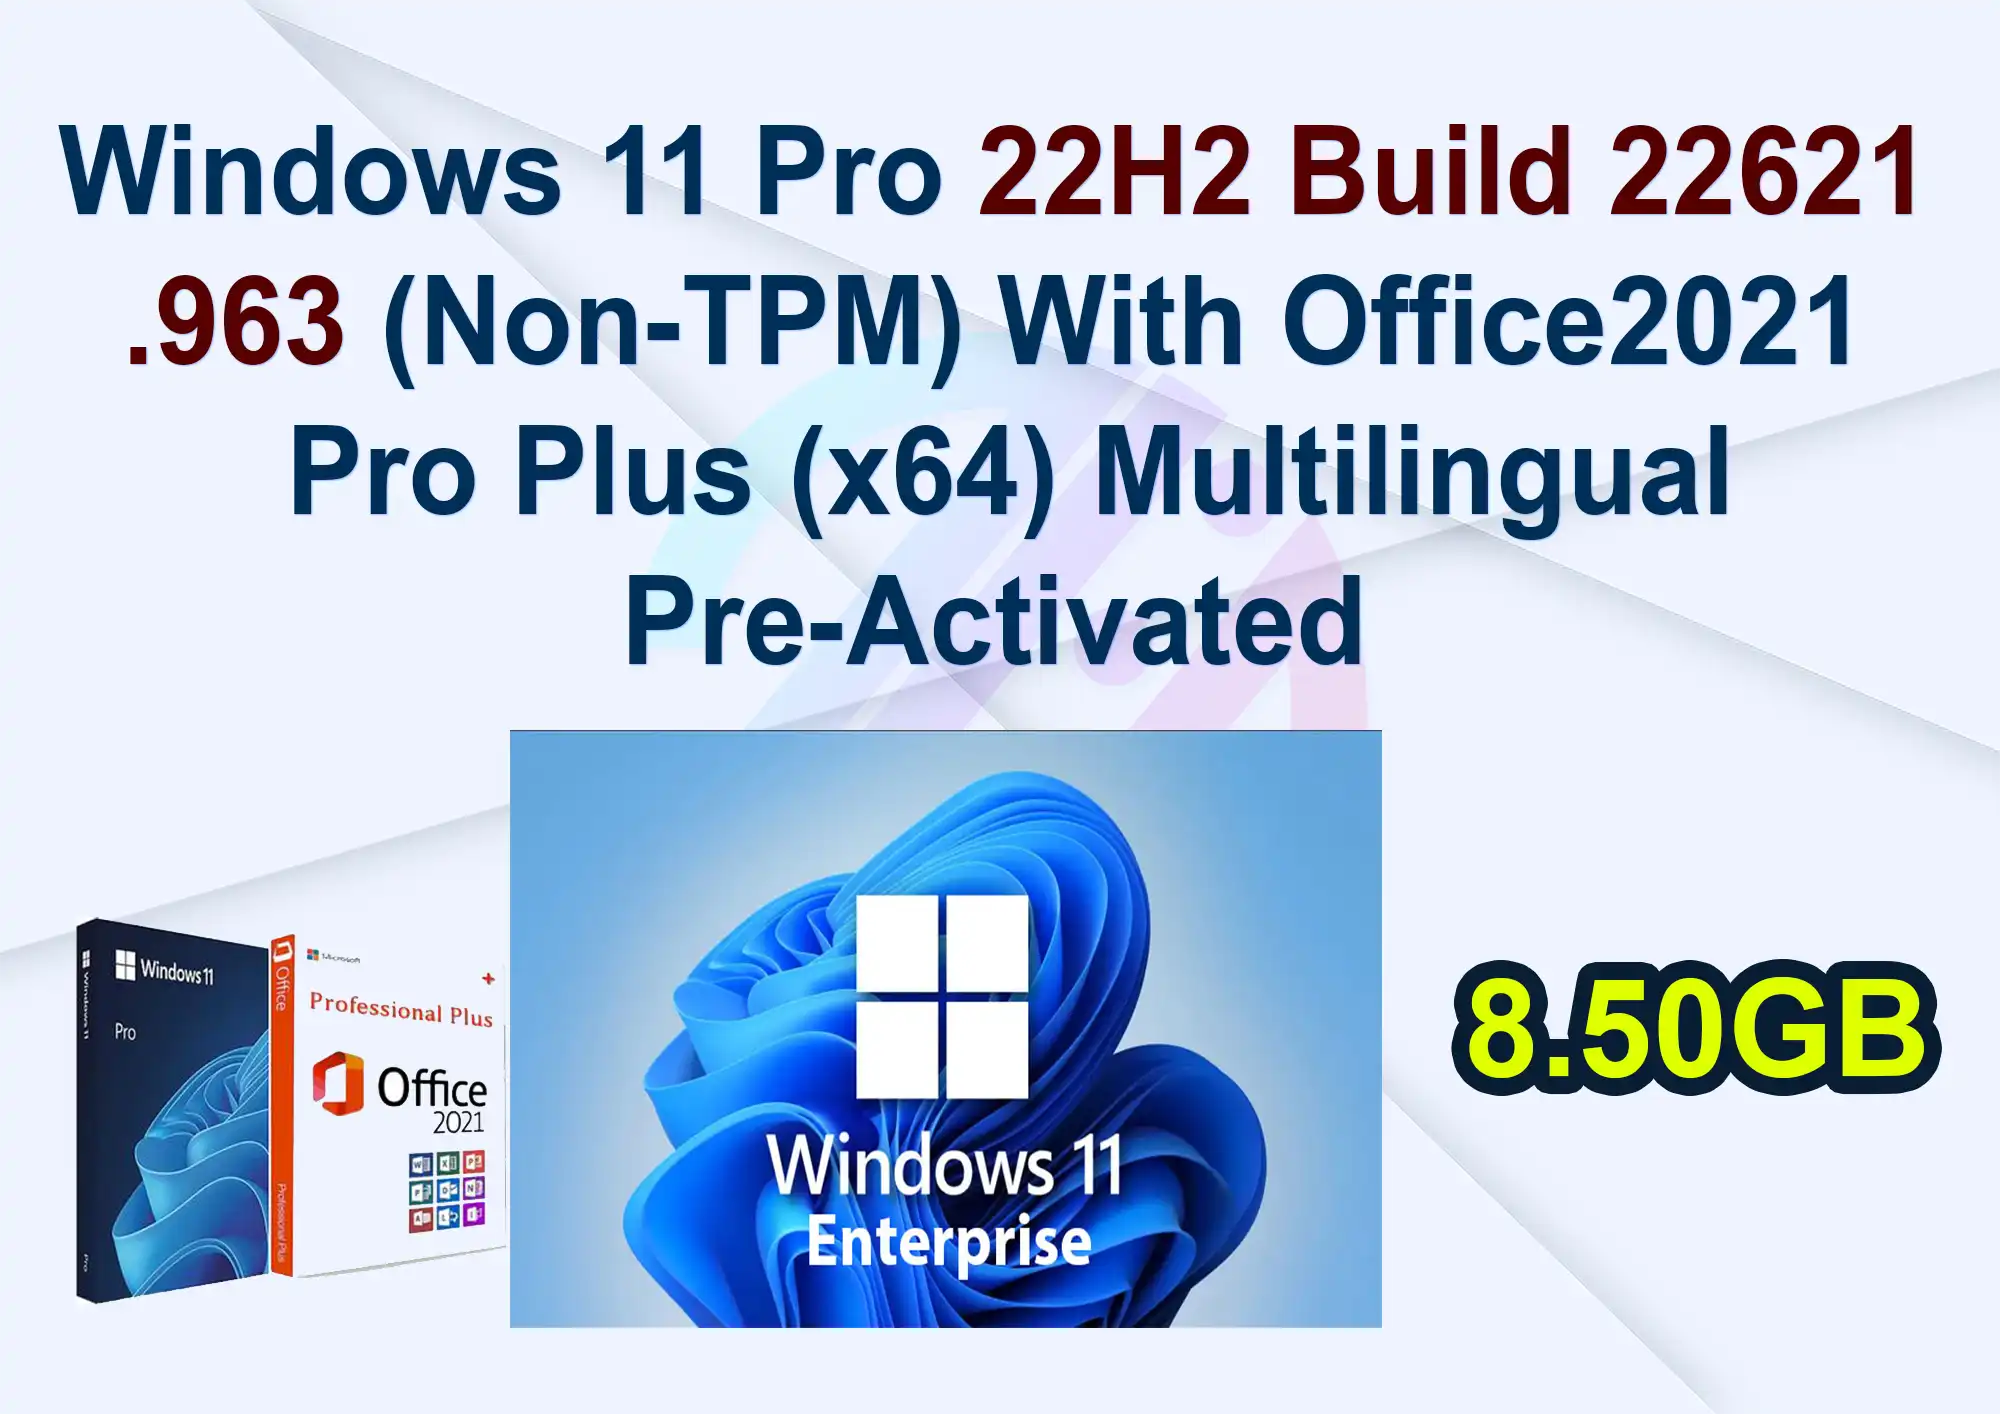 Windows 11 Pro 22H2 Build 22621.963 (Non-TPM) With Office 2021 Pro Plus (x64) Multilingual Pre-Activated